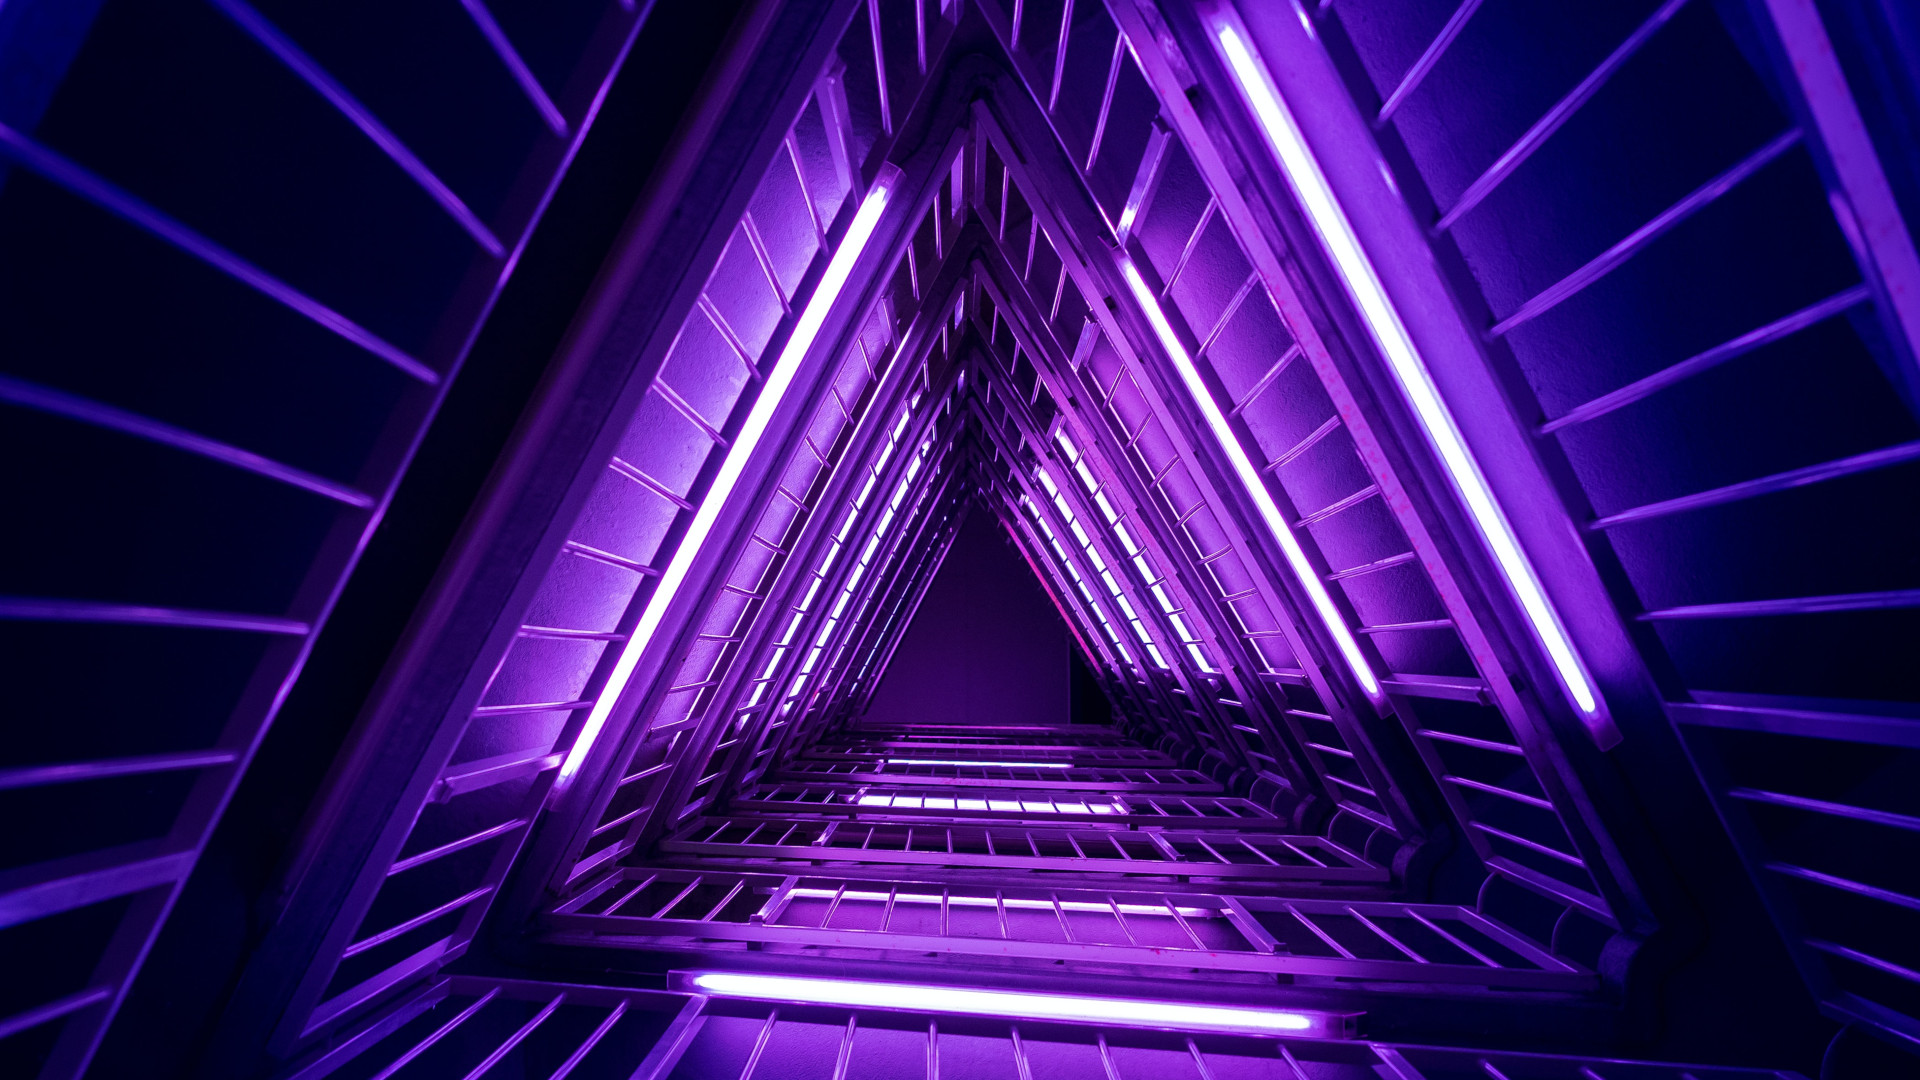 Neon purple lights illuminate a complex structure